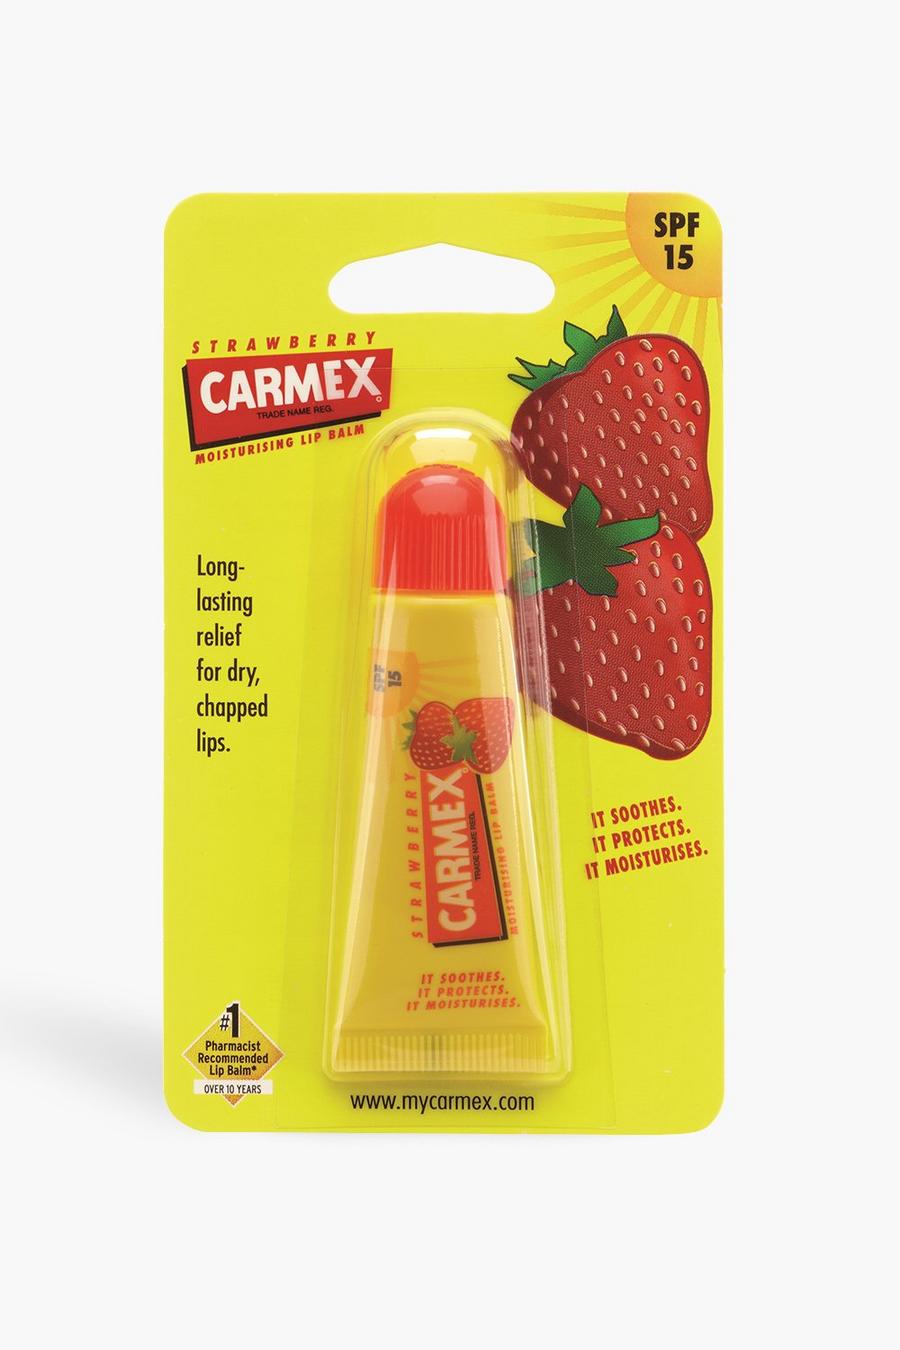 Yellow amarillo Carmex Strawberry Tube 10g